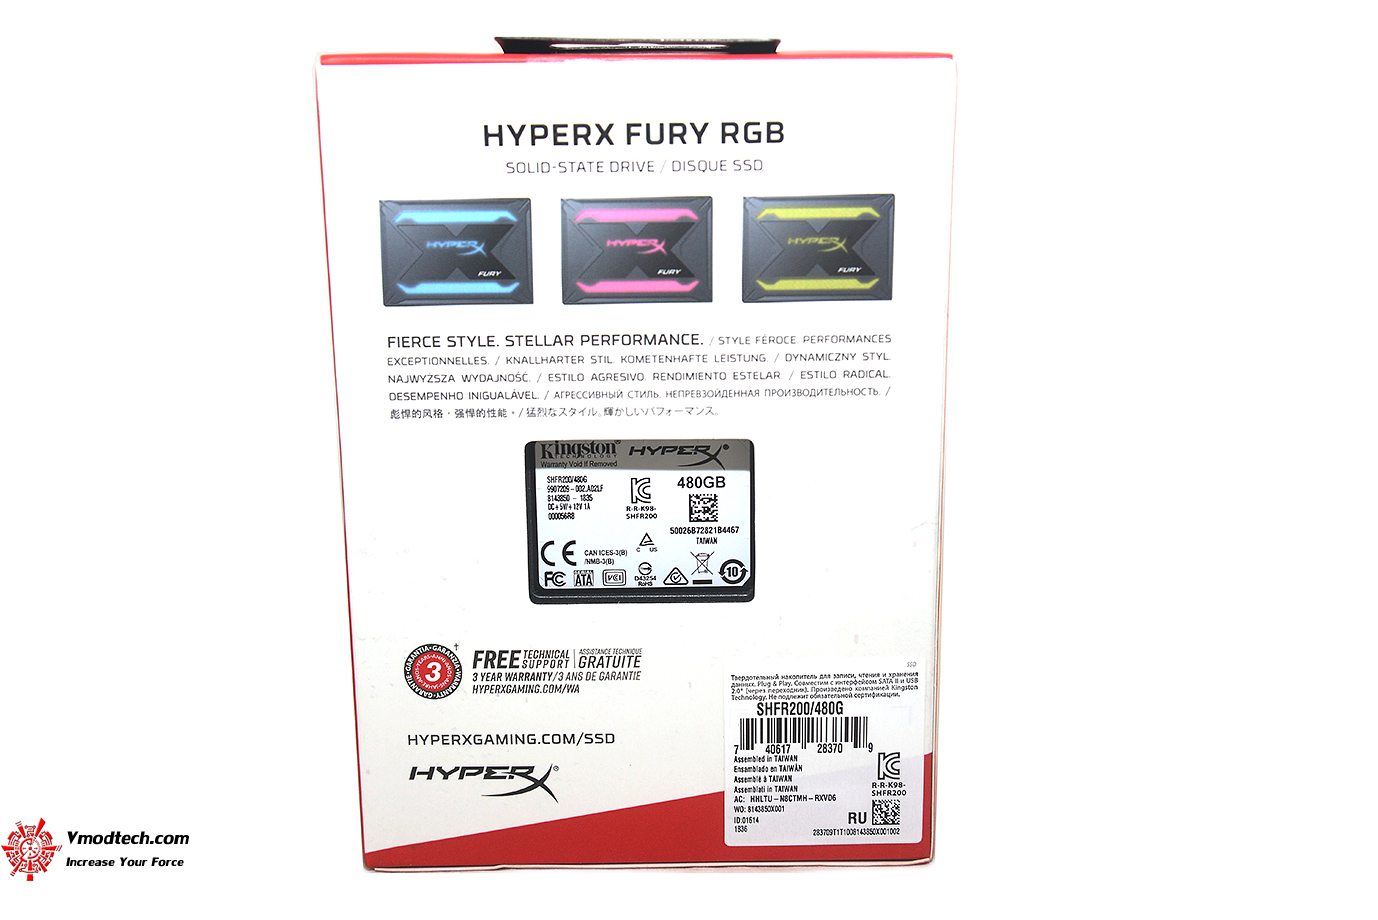 dsc 4275 HyperX FURY RGB SSD 480GB REVIEW